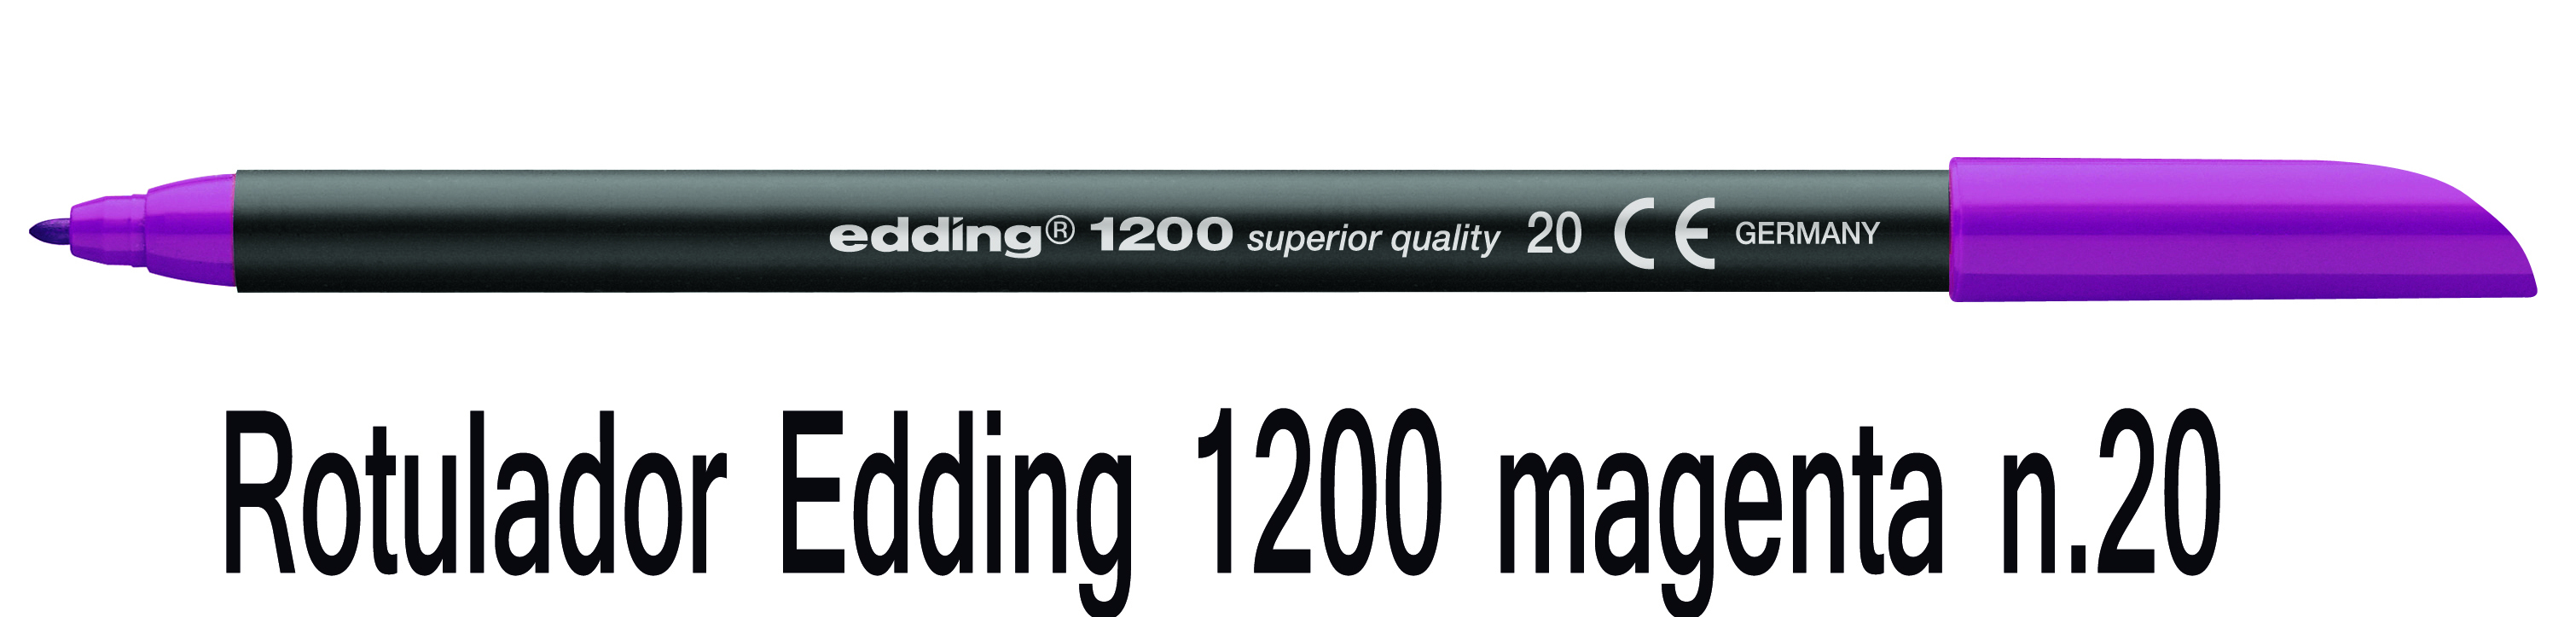 Rotulador Edding 1200 magenta n.20